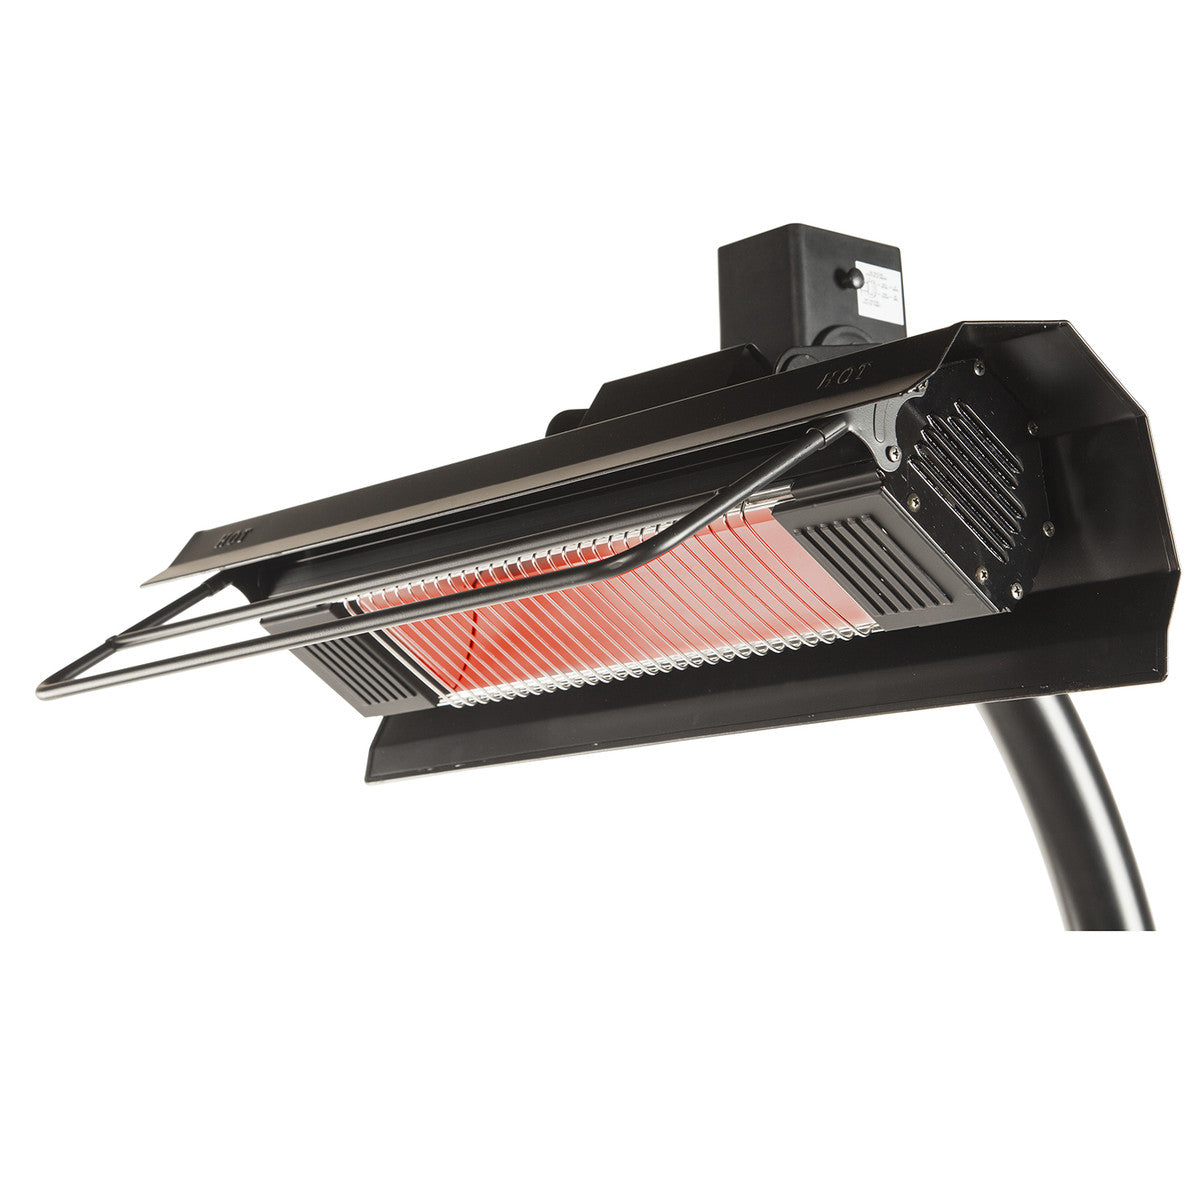 Paramount 1500w Telescopic Infrared Patio Heater, Black